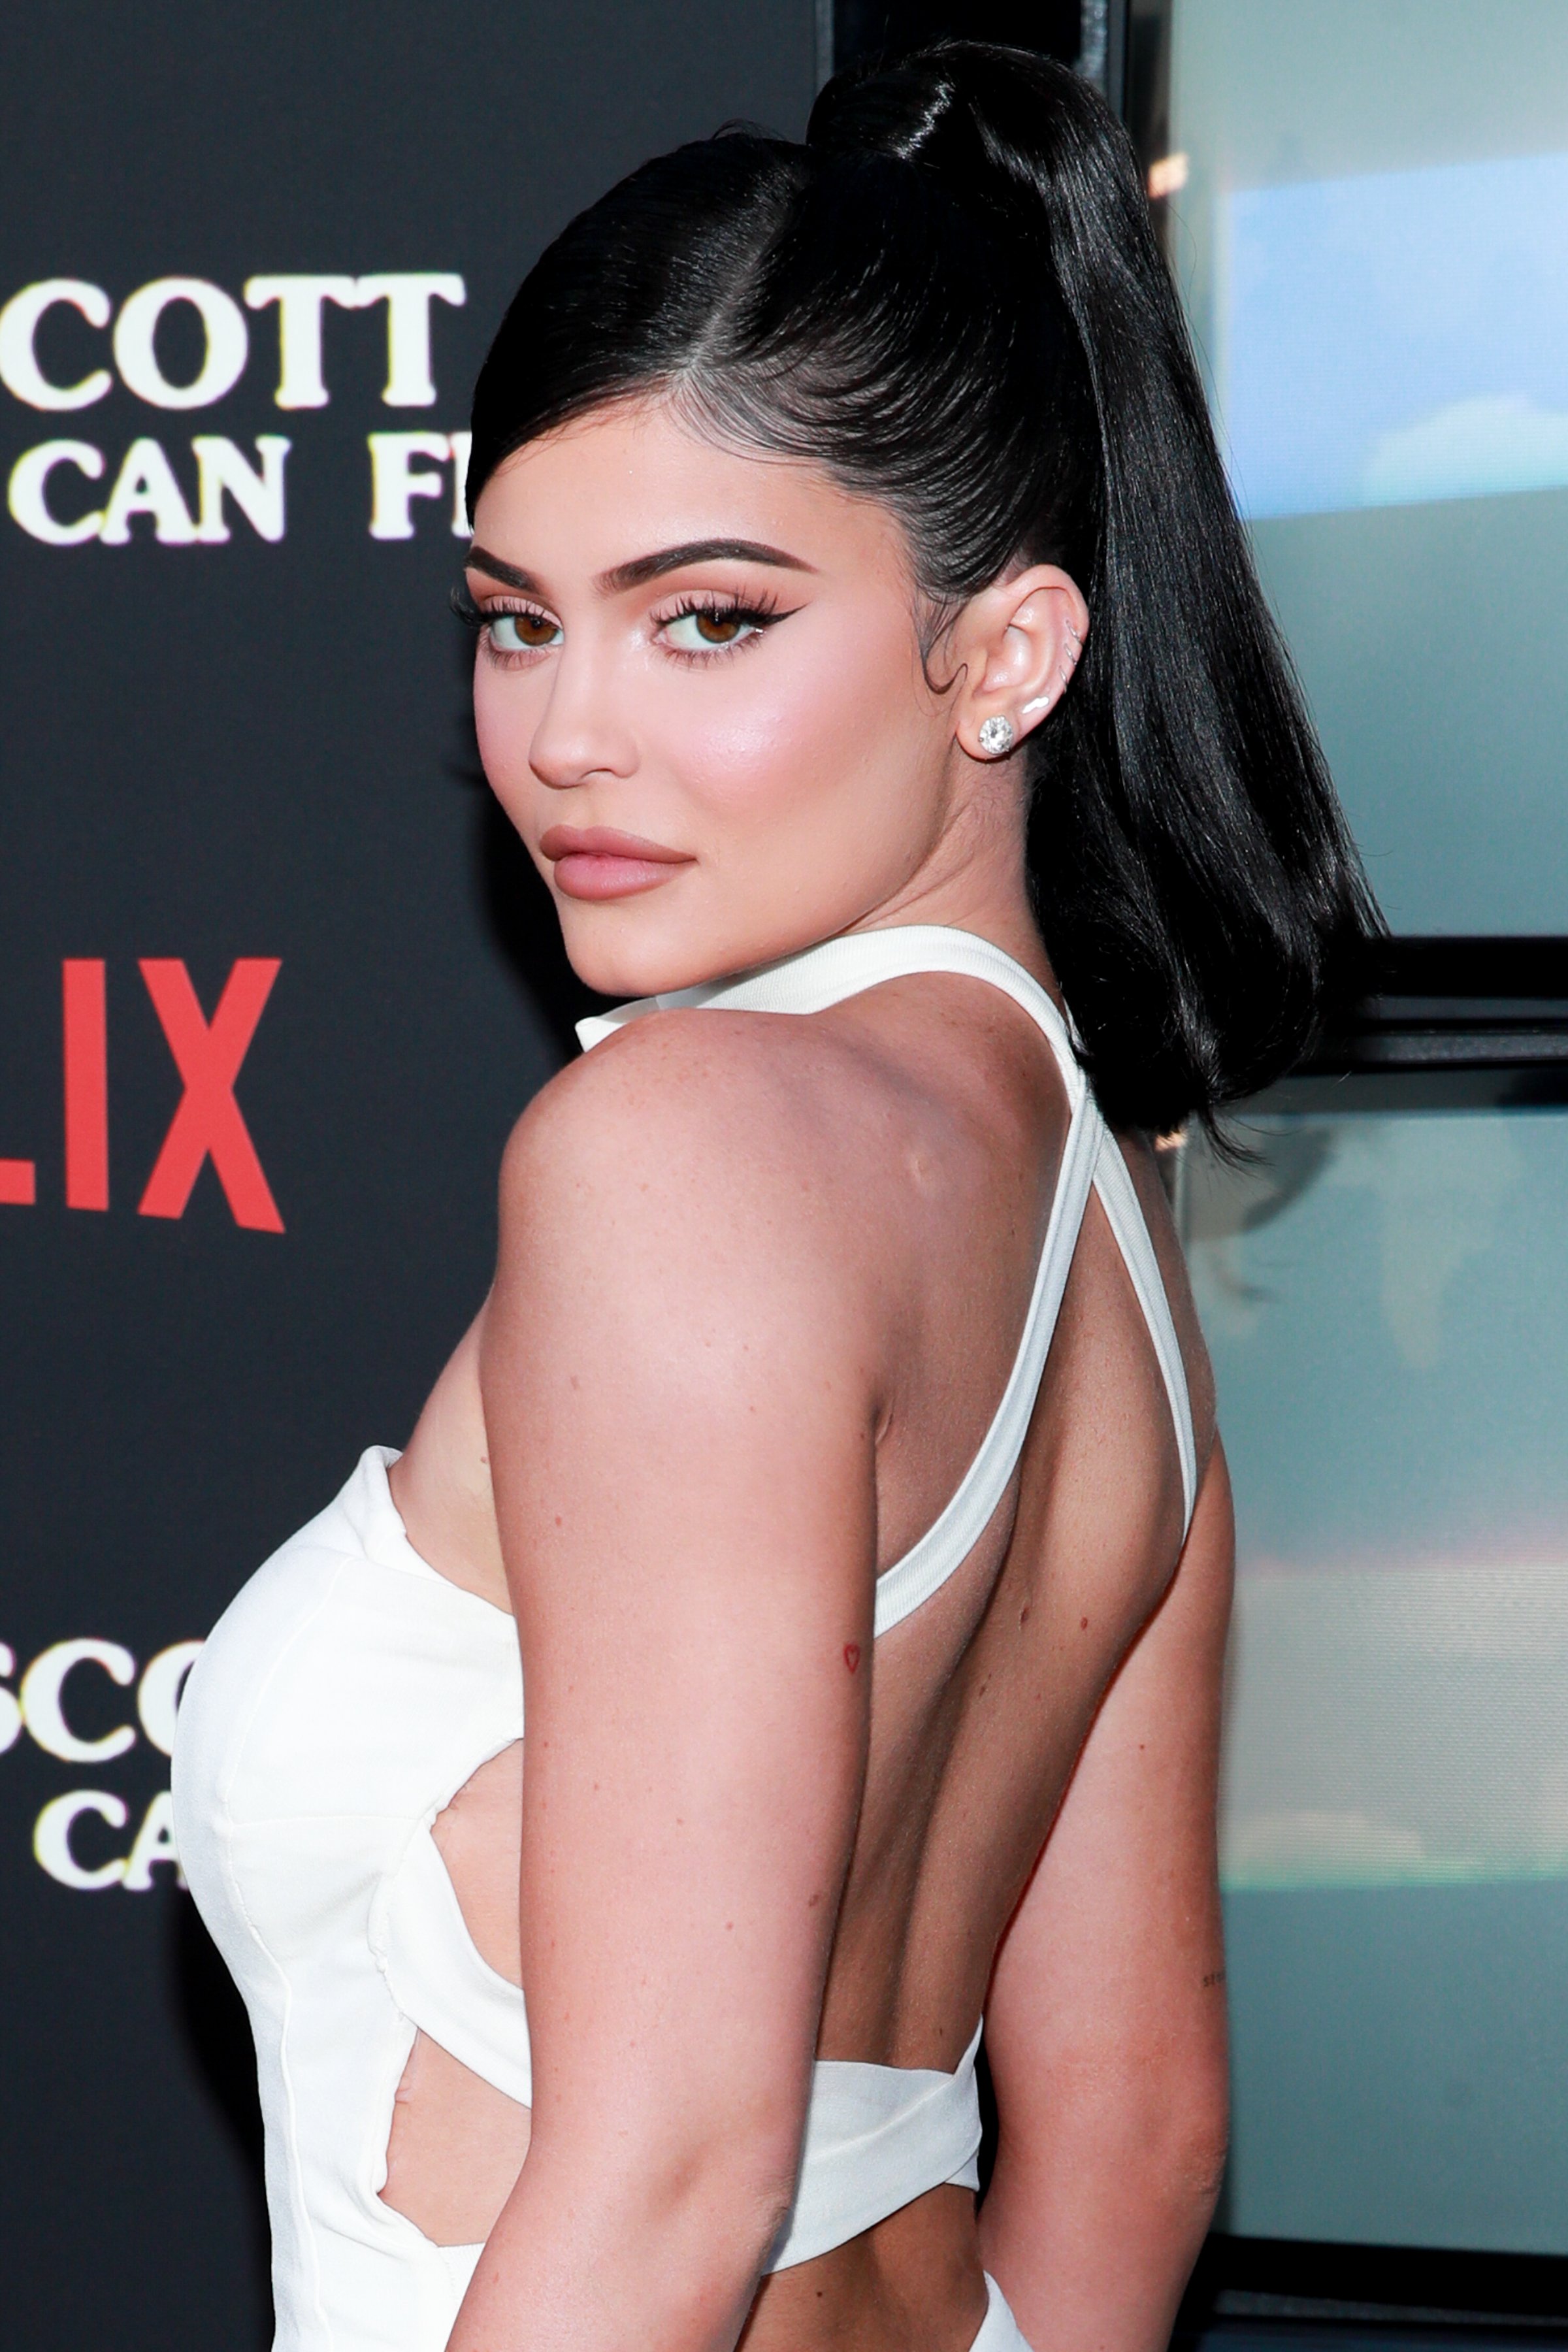 Kylie Jenner en el estreno del documental de Netflix de Travis Scott, "Travis Scott: Look Mom I Can Fly" en agosto de 2019. | Foto: Getty Images